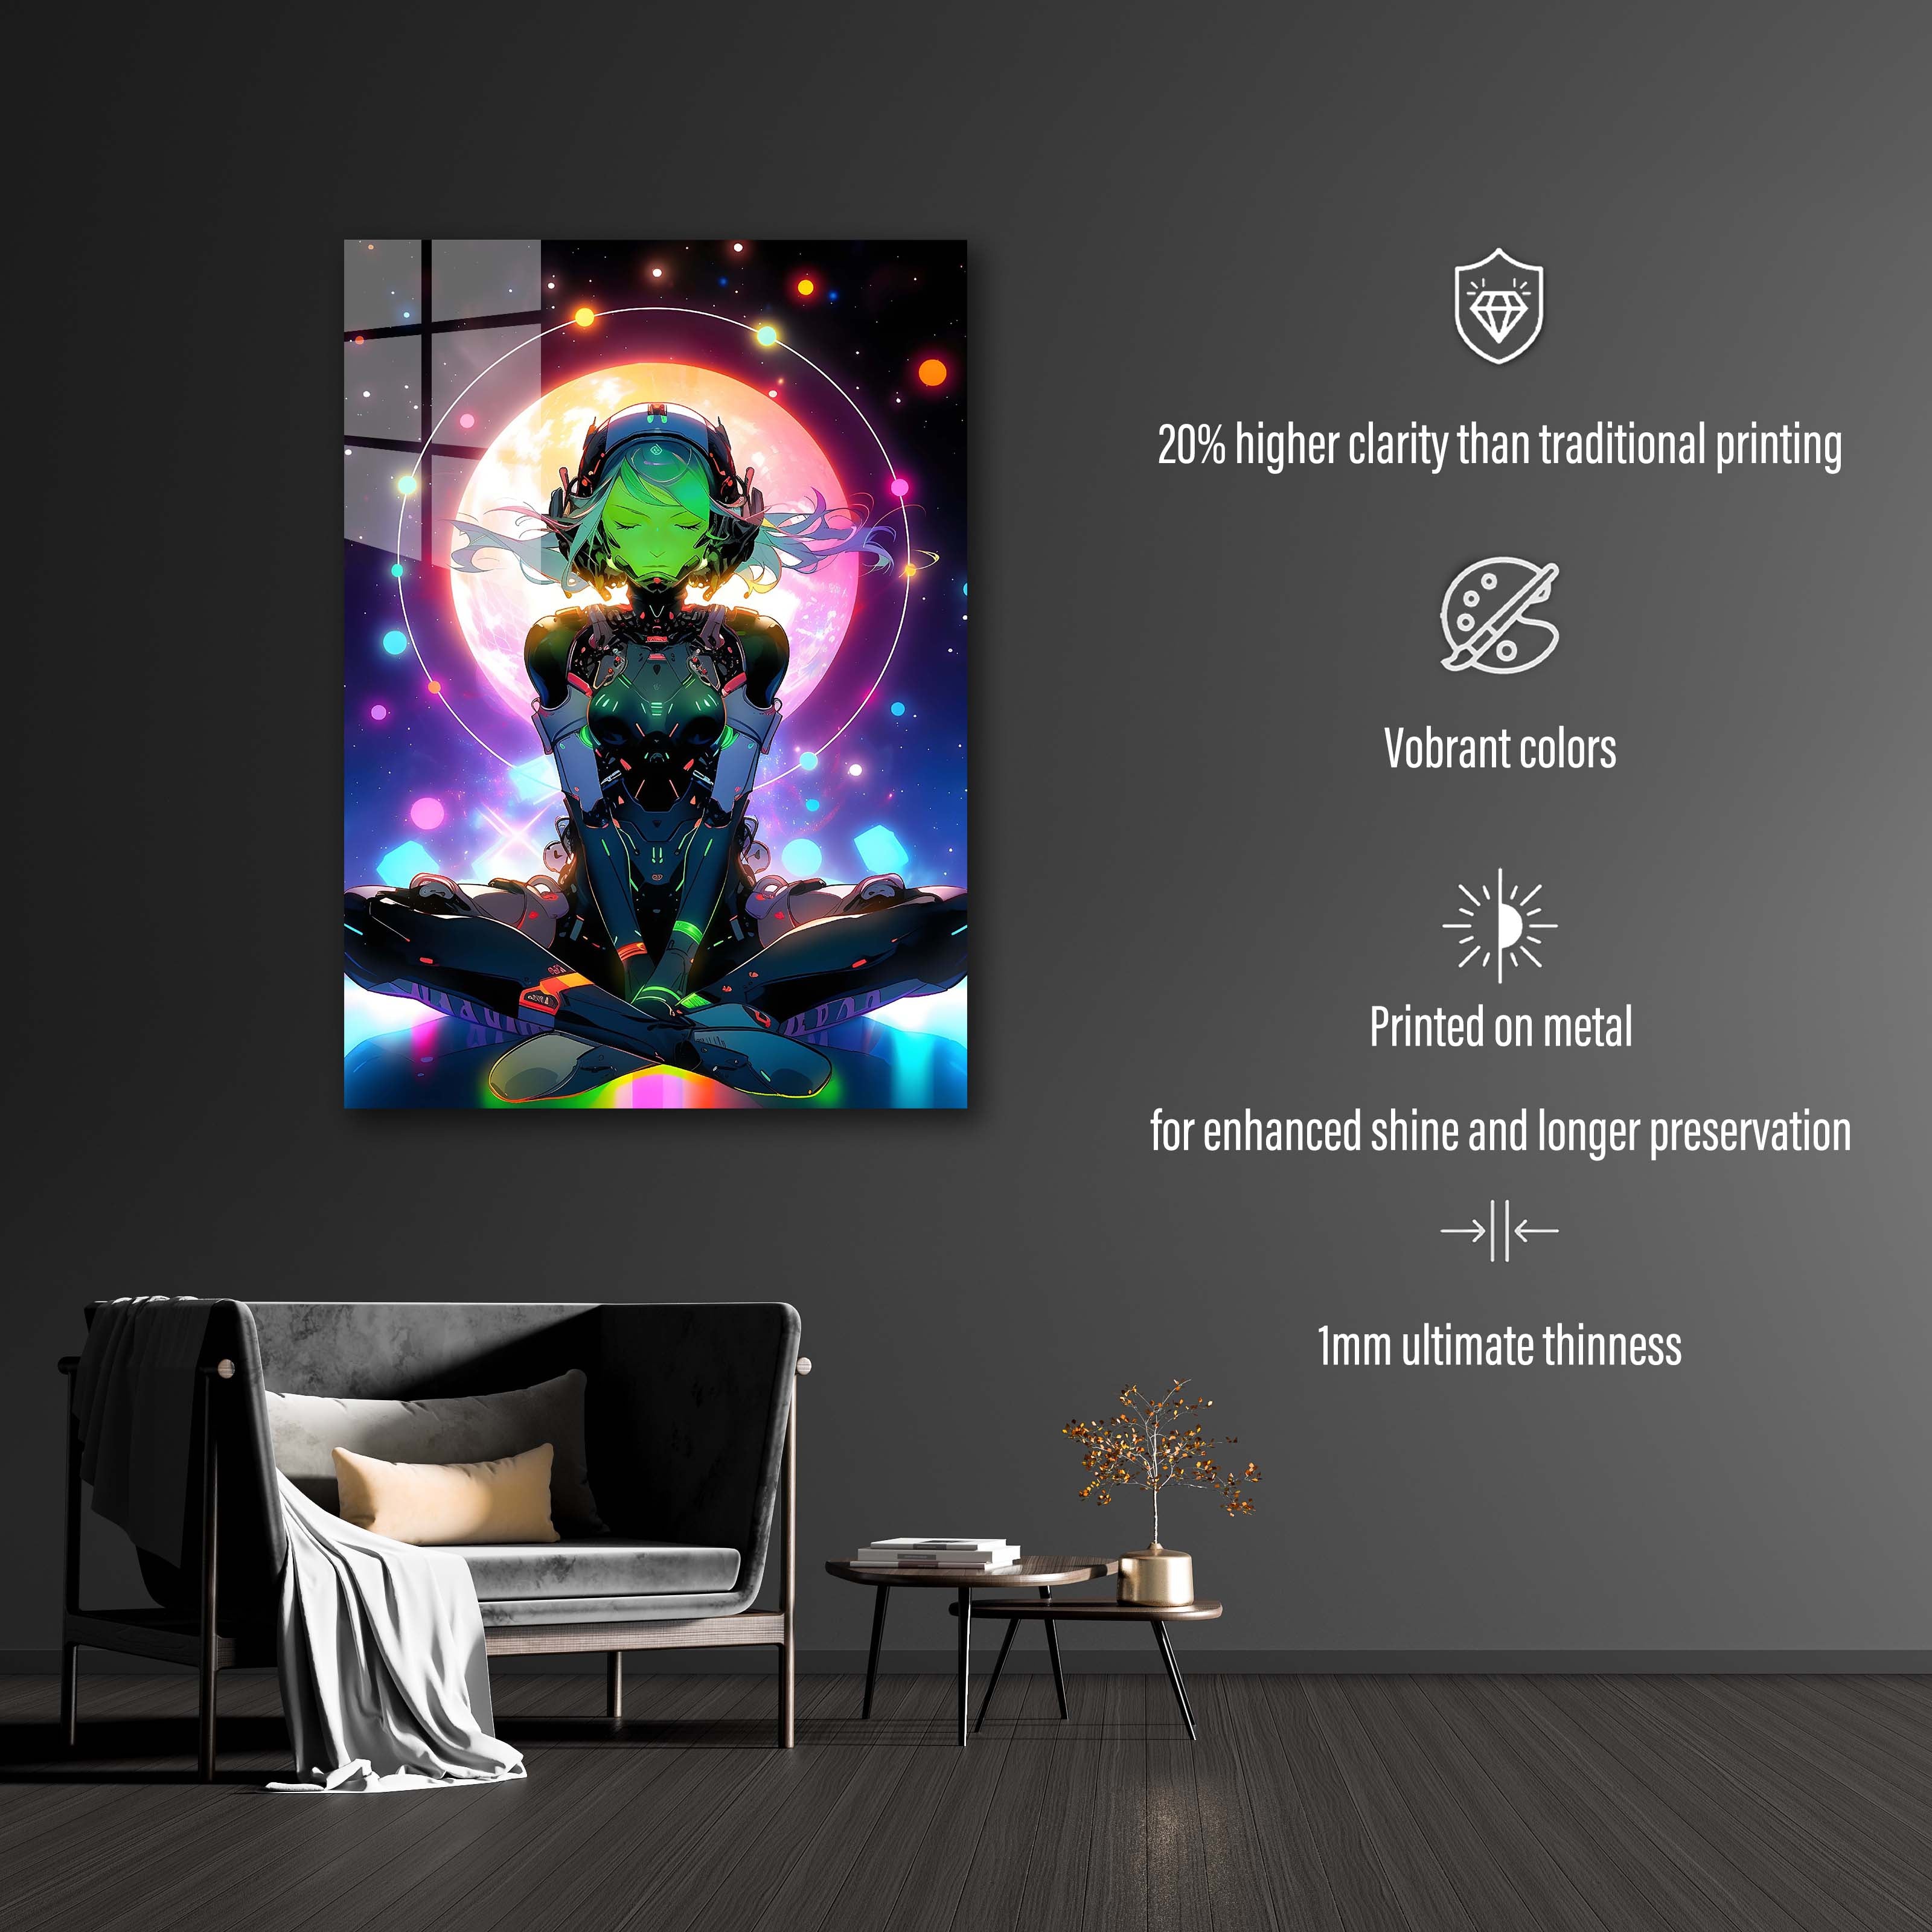 Cosmic Meditation5-designed by @Memetic Agent